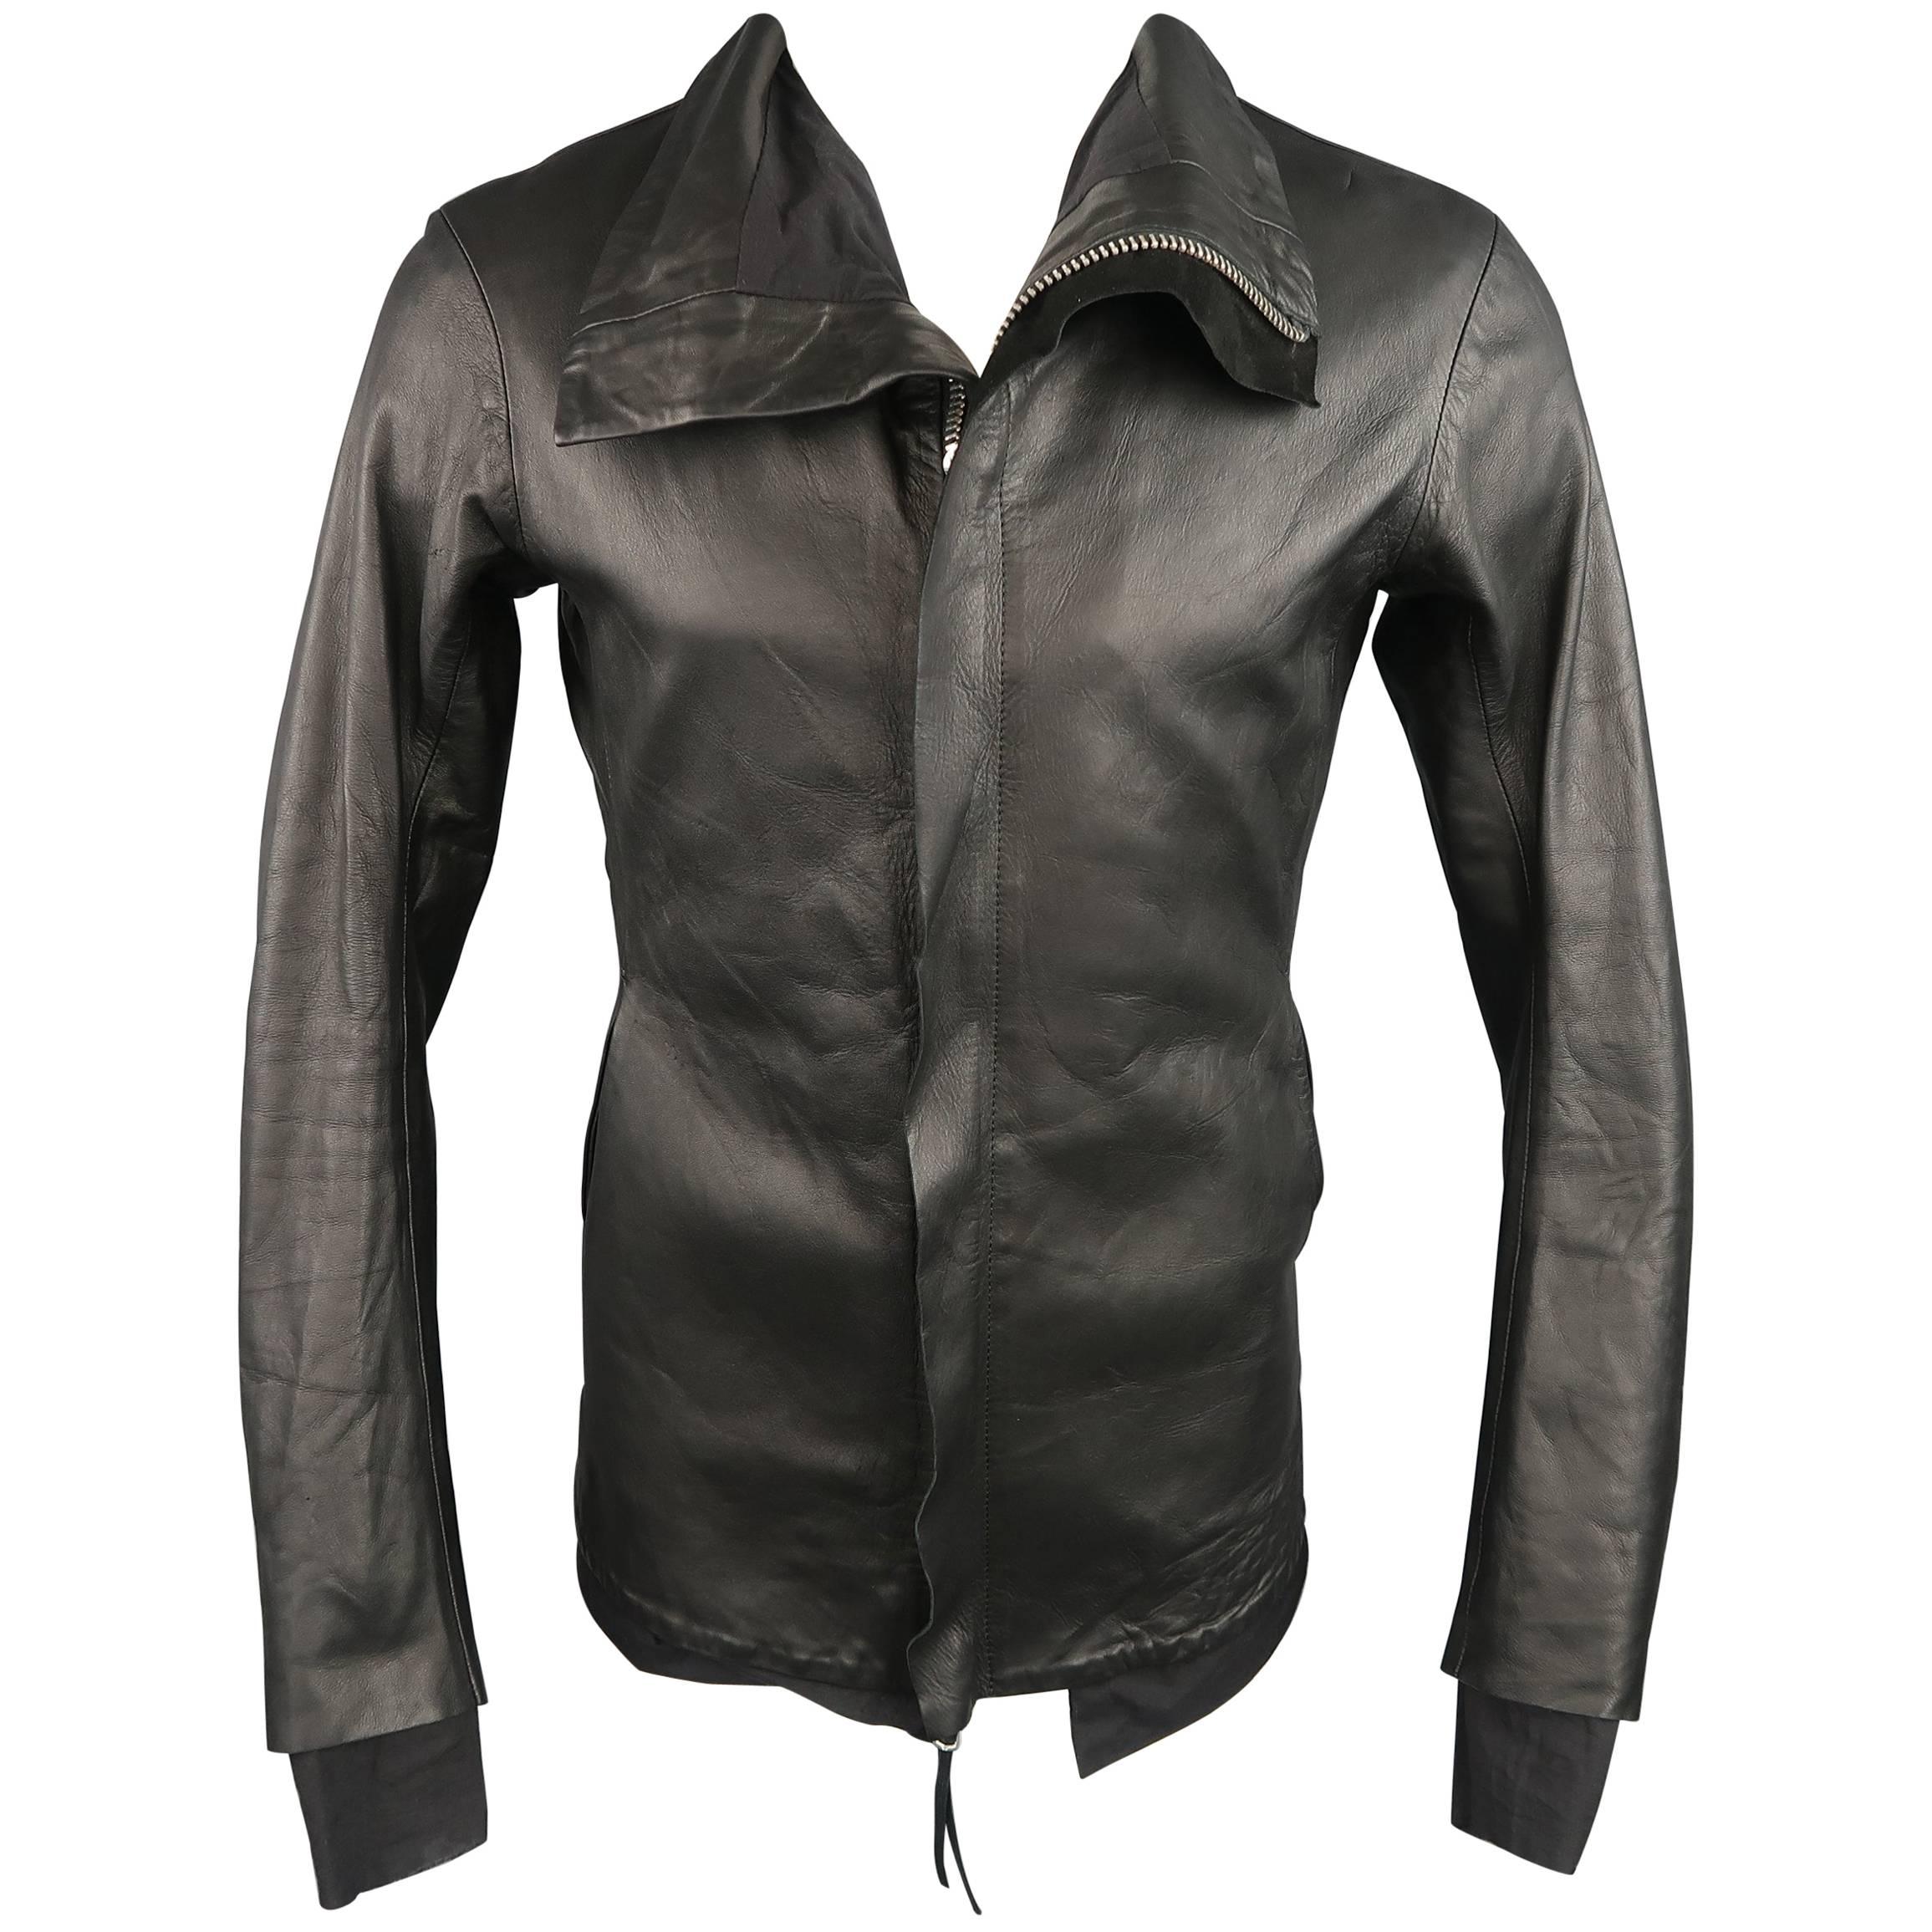 Boris Bidjan Saberi Jacket SS12 "Outside" Black Leather High Collar Coat Jacket